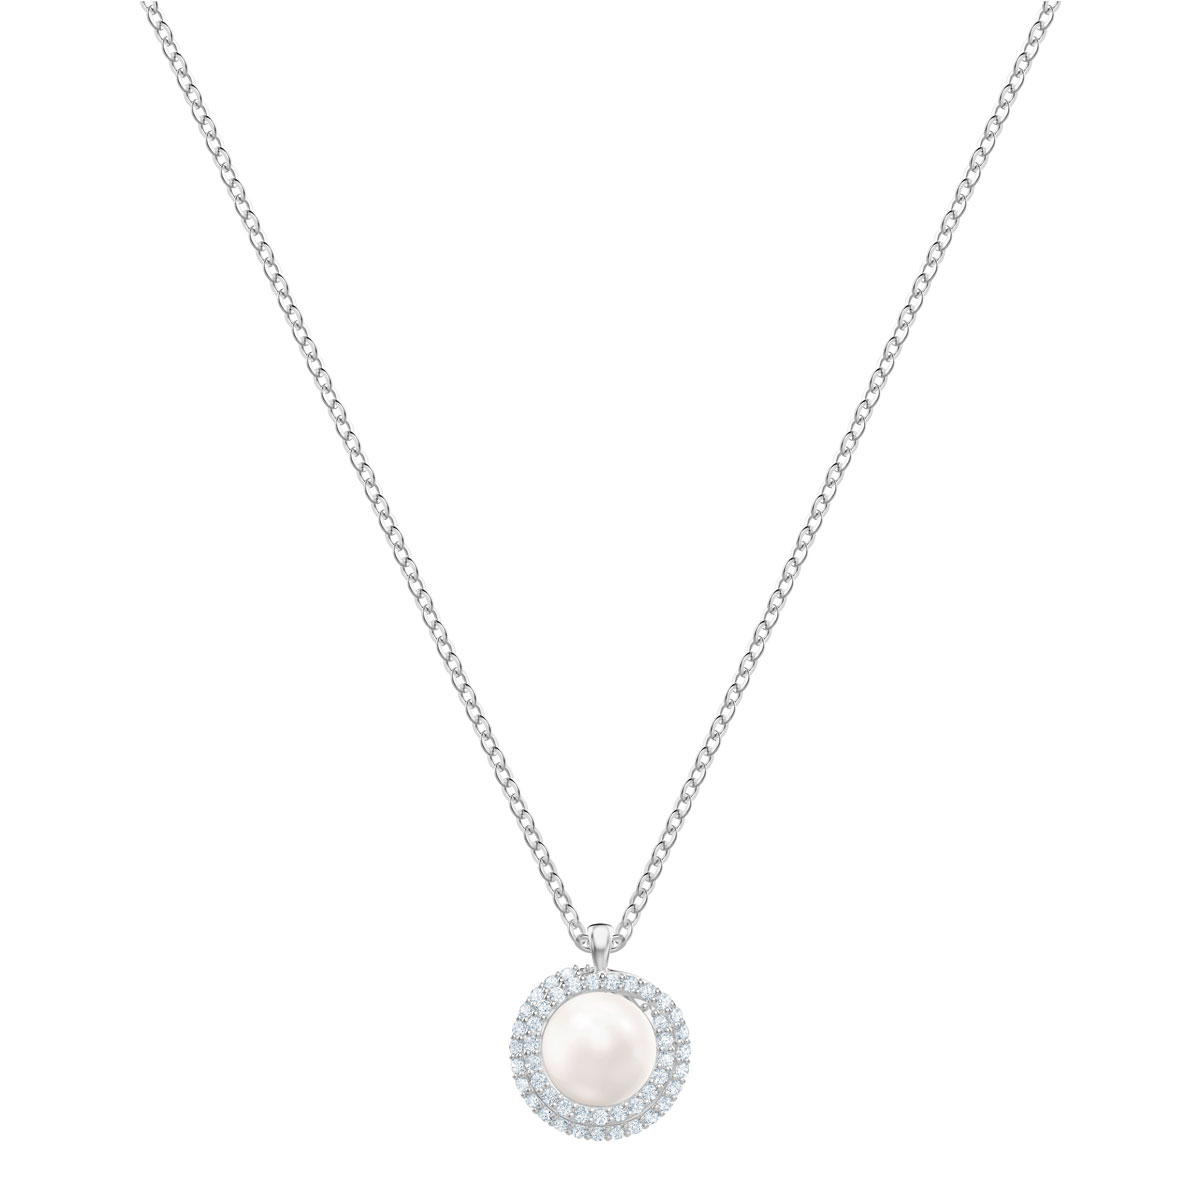 Swarovski White Crystal, Pearl and Rhodium Originally Pendant Necklace